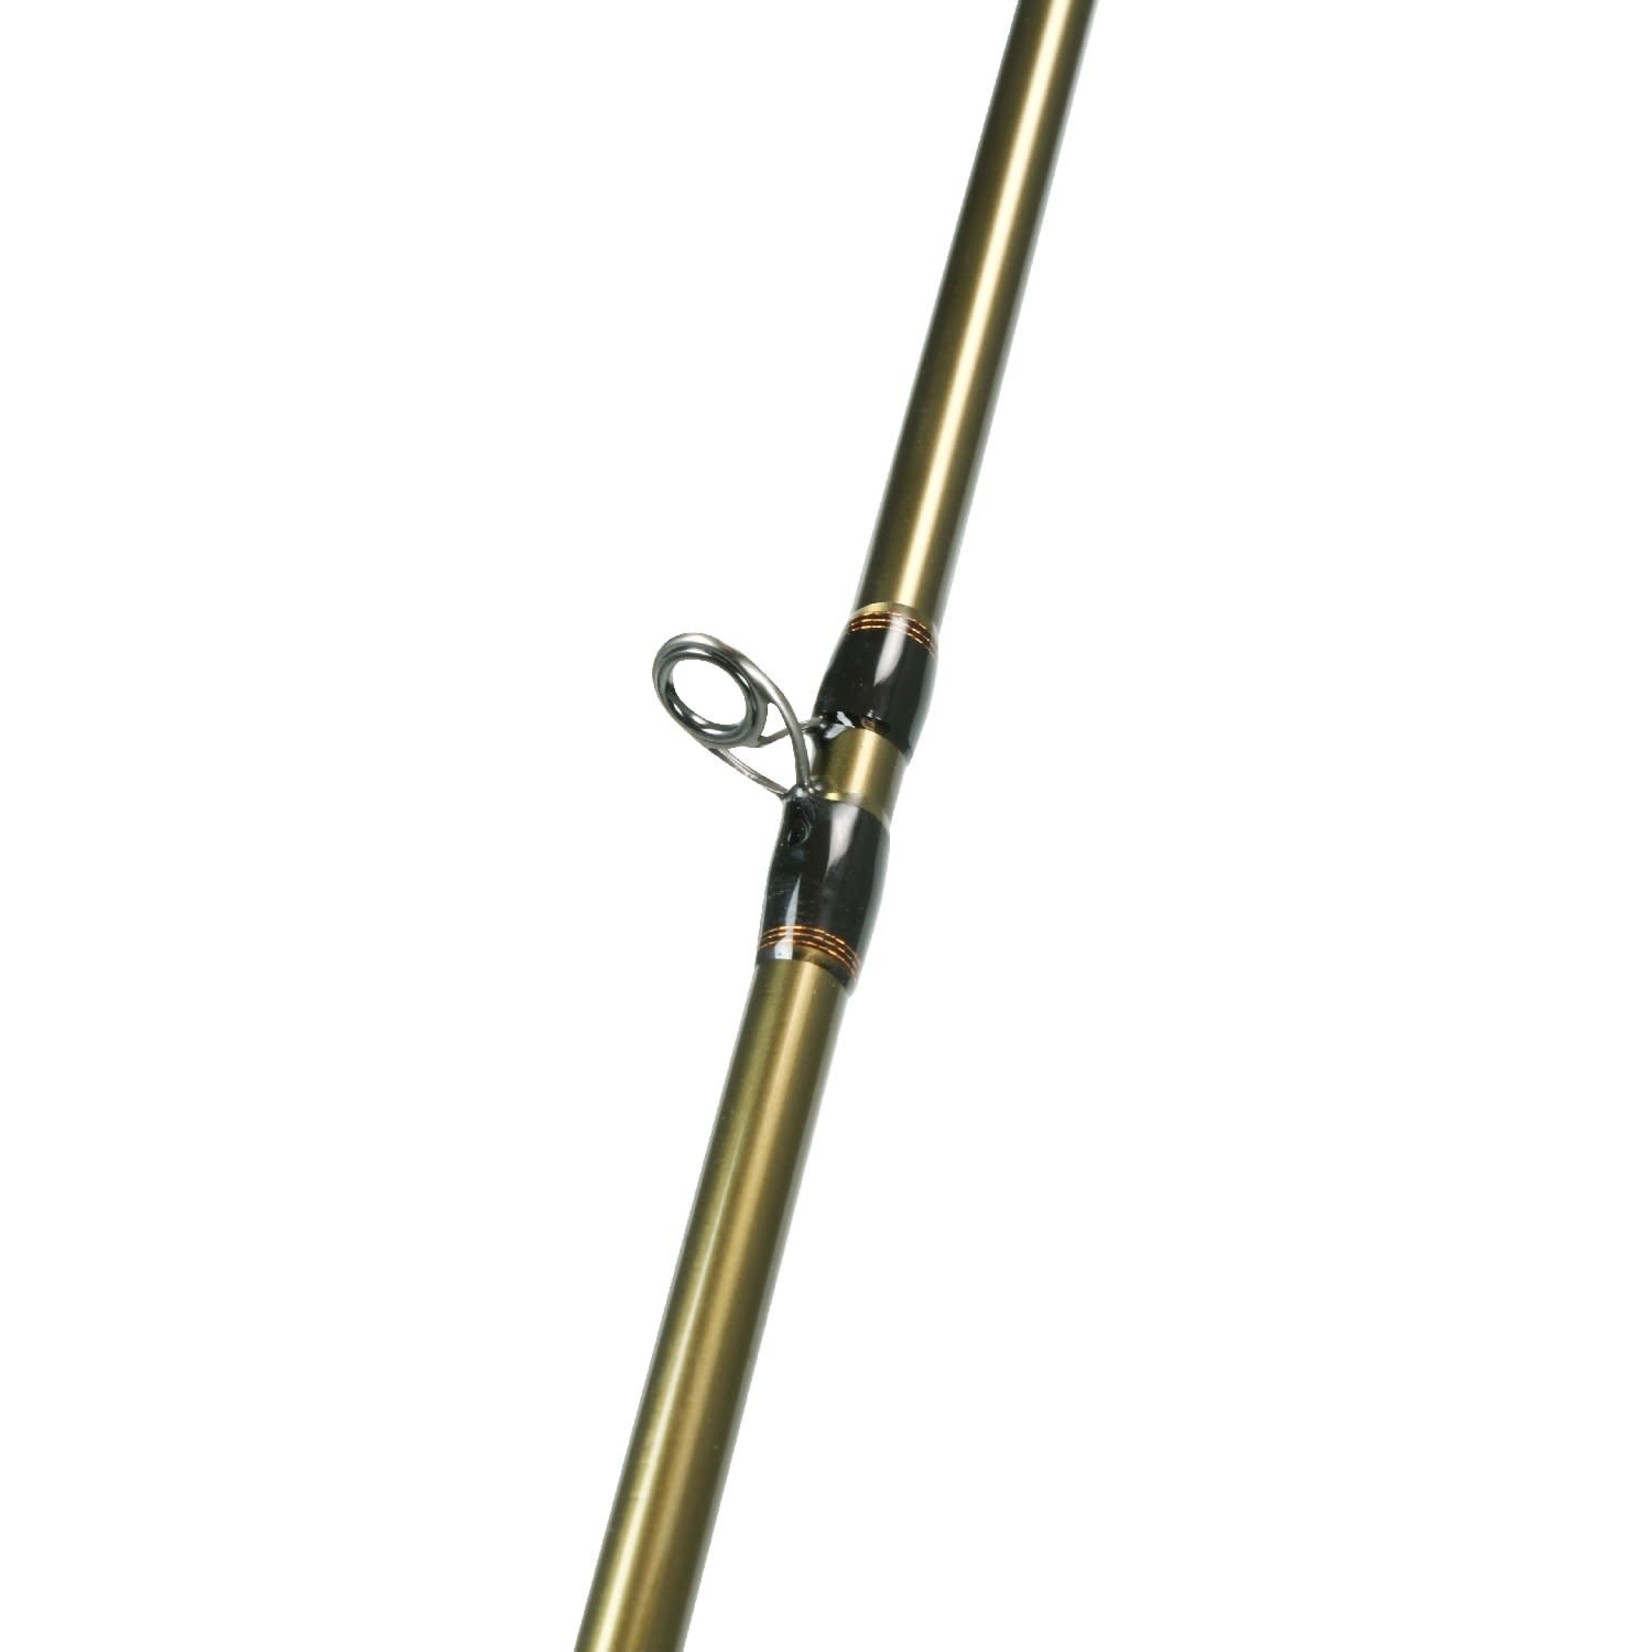 Okuma Dead Eye Pro 7'10 Medium Trolling Rod - Boutique l'Archerot